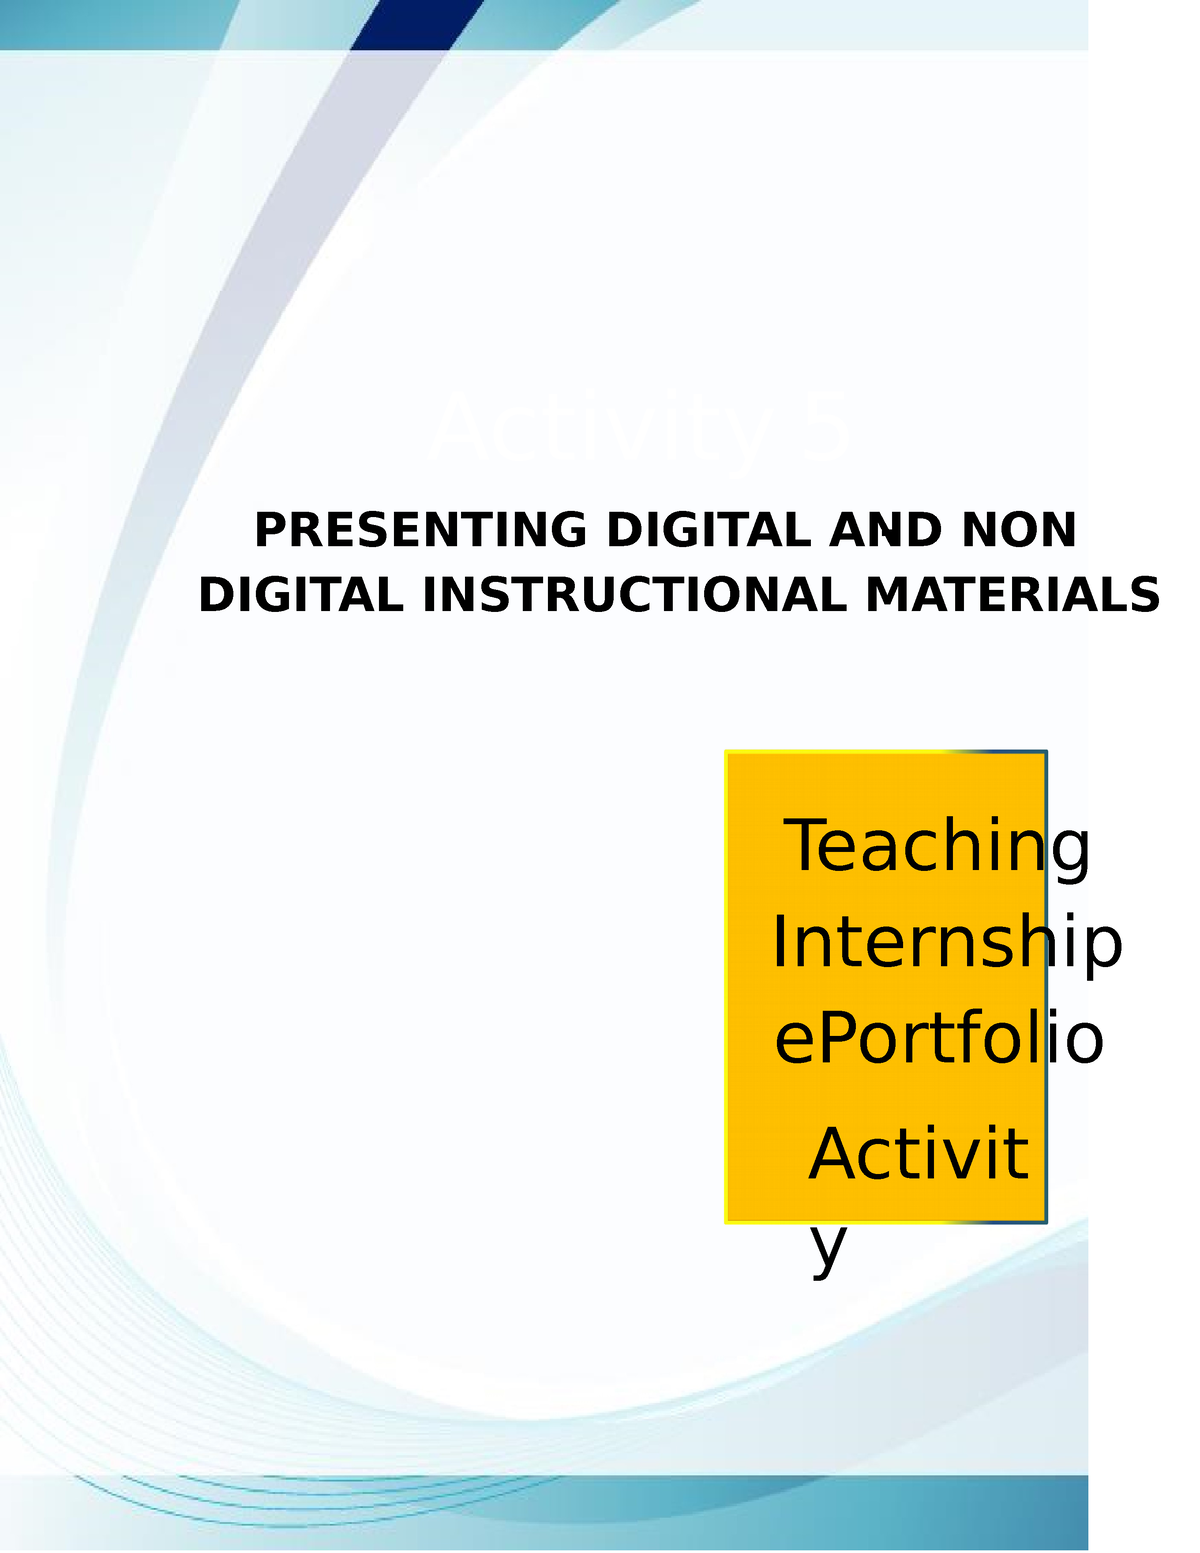 activity-5-presenting-digital-and-non-digital-instructional-materials